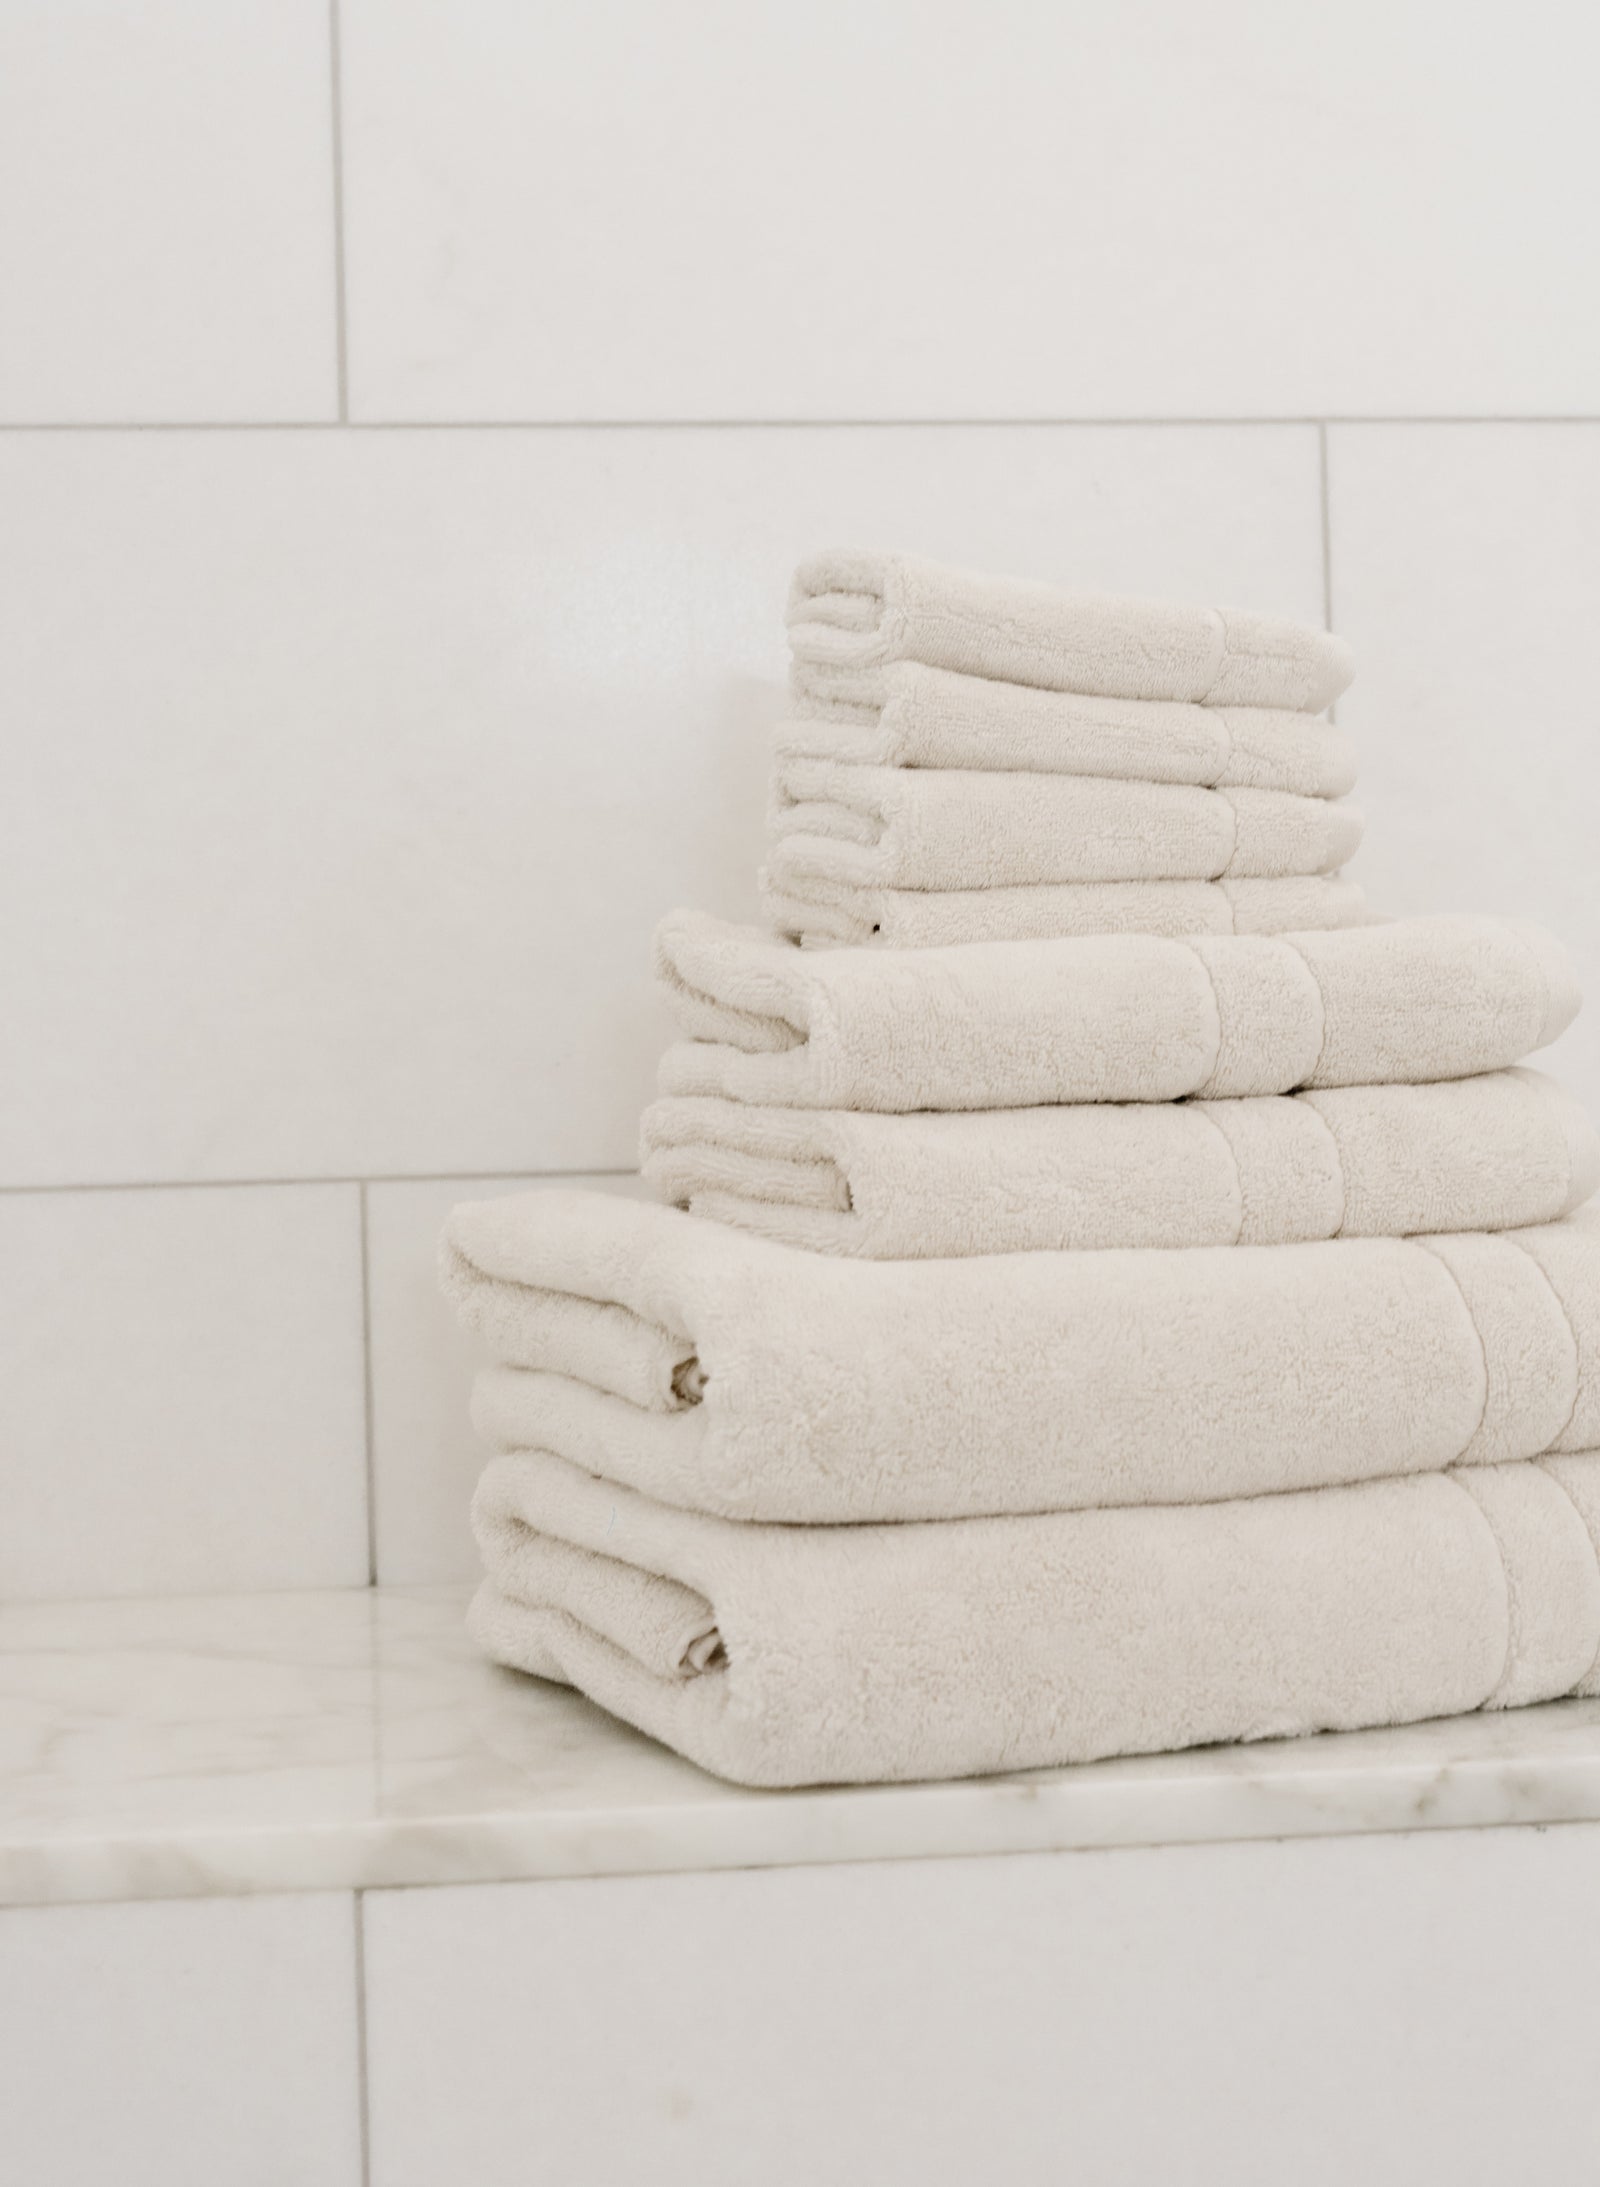 Premium Plush Bath Towel Set in the color Seashell. Photo of Seashell Premium Plush Bath Towel Set taken in a bathroom featuring white backsplash tile 